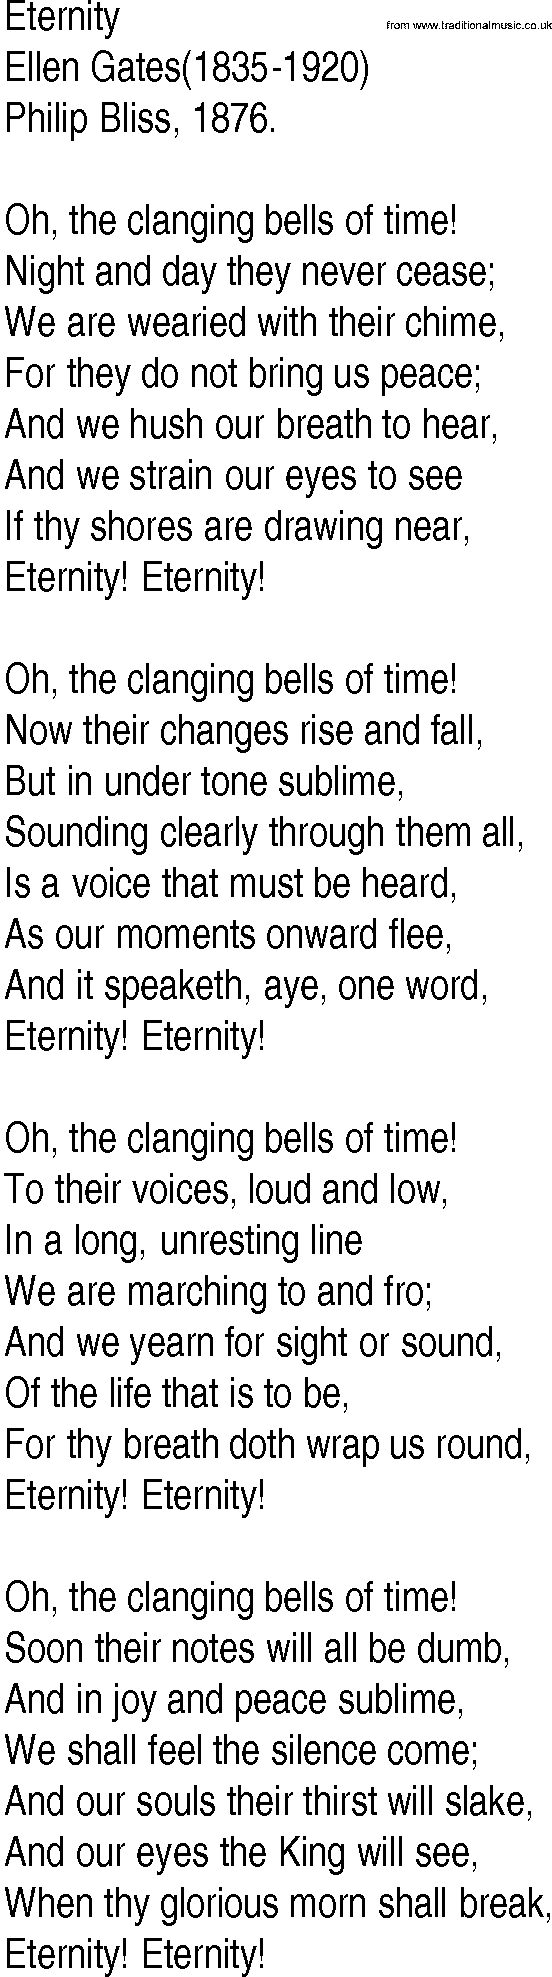 Hymn and Gospel Song: Eternity by Ellen Gates lyrics